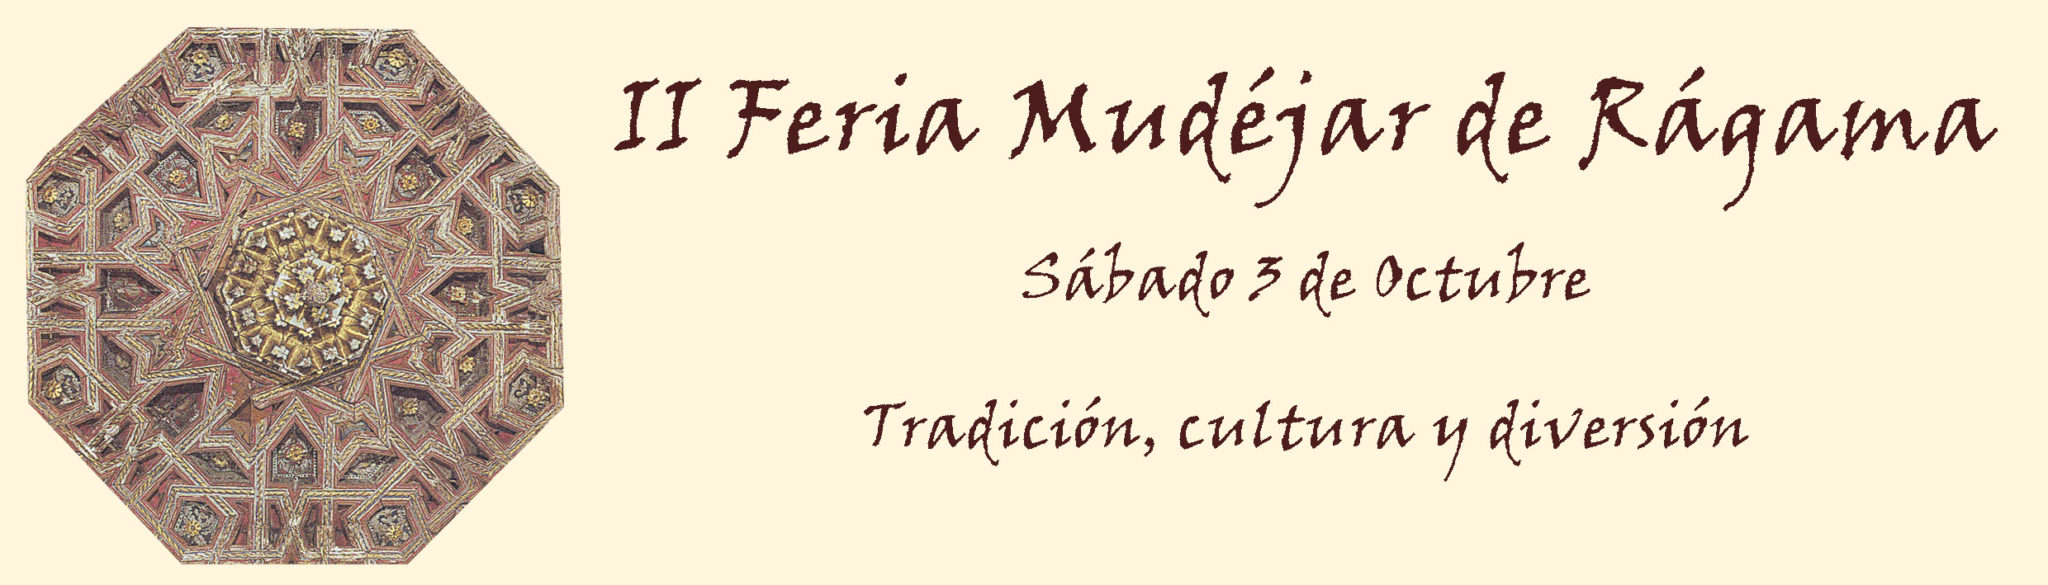 03 de Octubre del 2015 – II Feria mudejar de Ragama, Salamanca